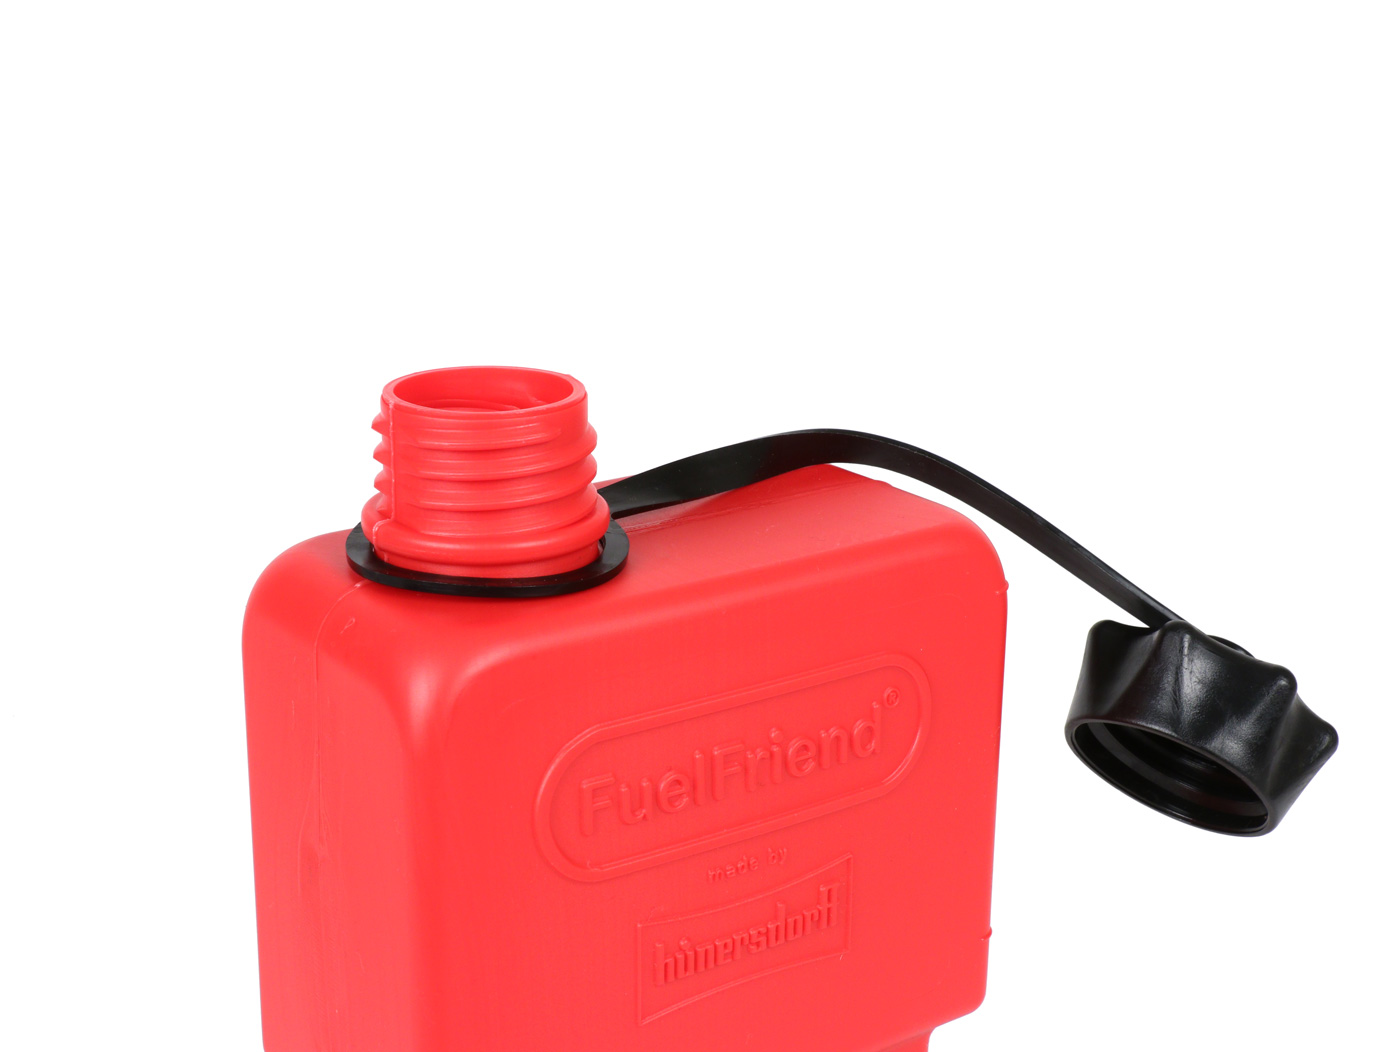 Fuel jerry can 1.5L (1500ml) -HÜNERSDORFF FuelFriend PLUS- red, Jerry cans, Workshop supplies